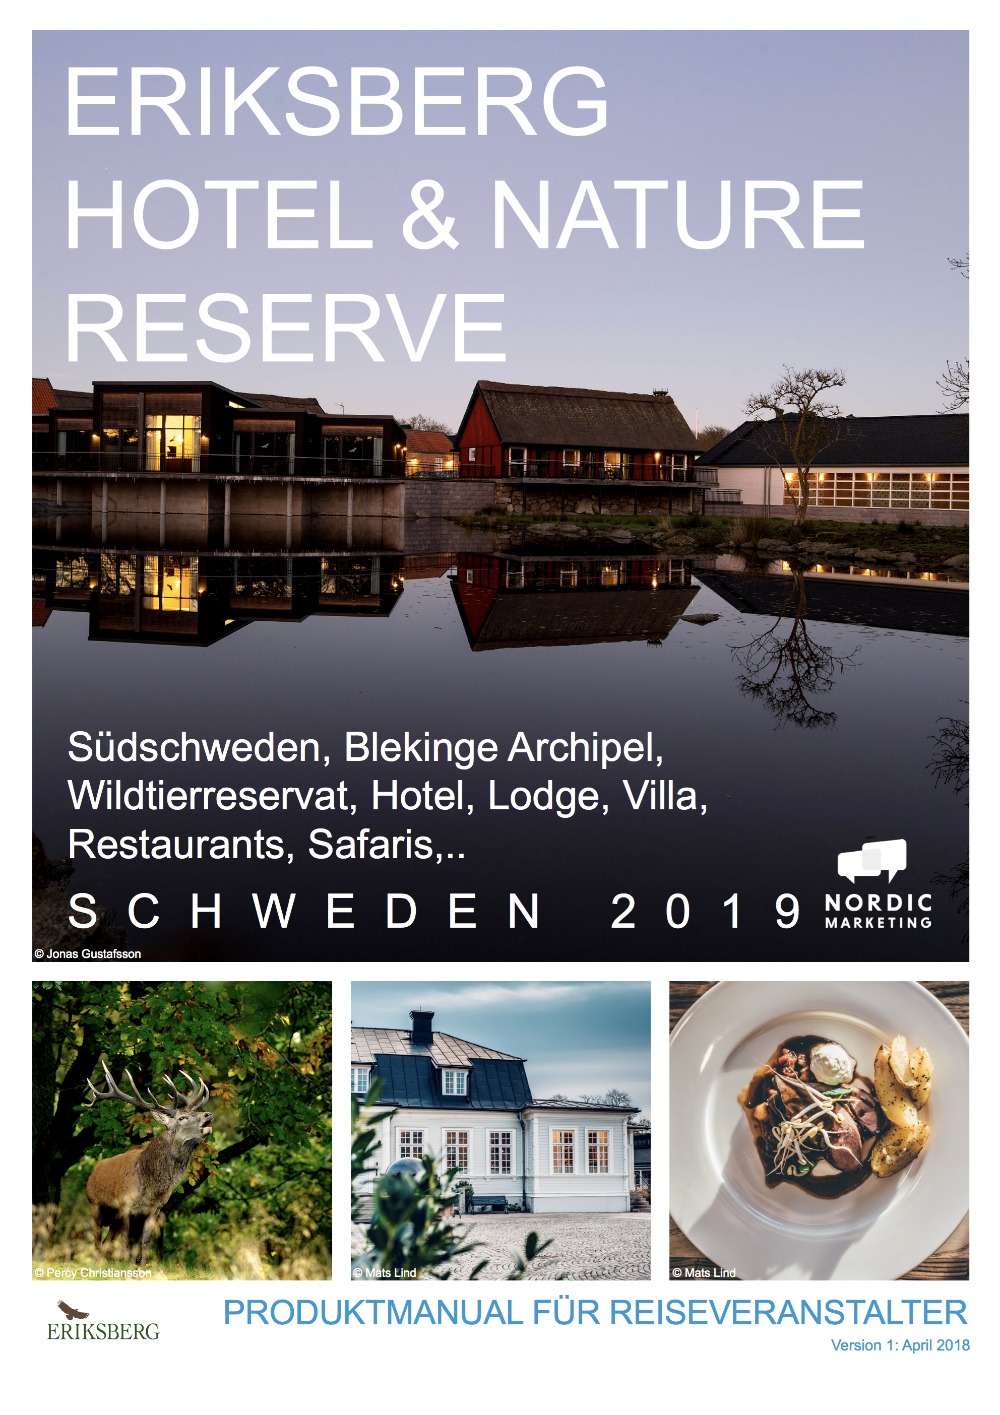 Eriksberg Hotel & Nature Reserve Produktmanual Cover